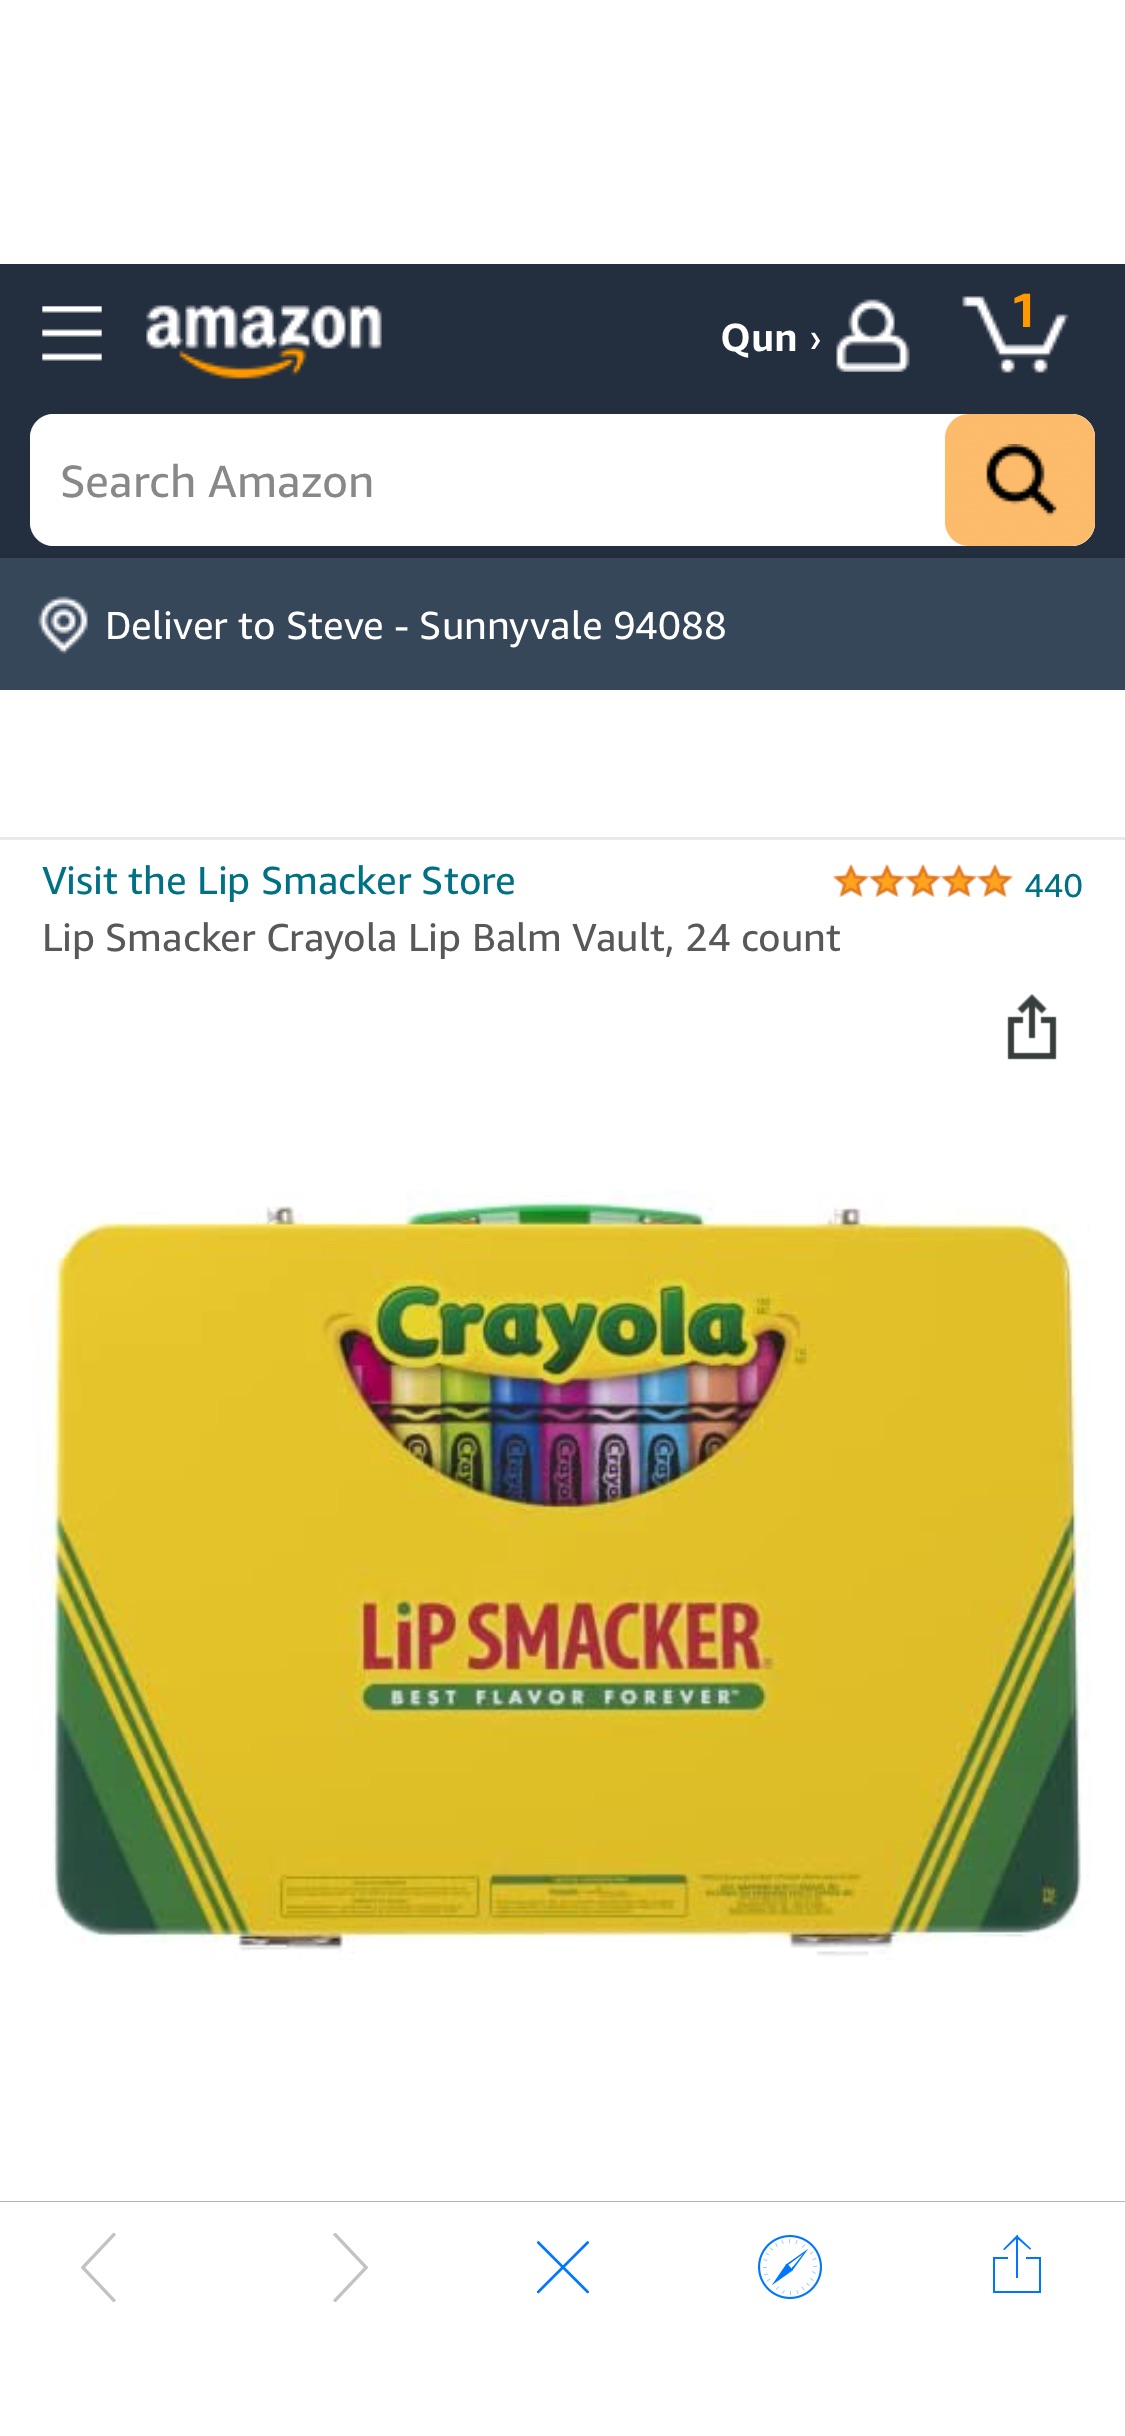 Amazon.com : Lip Smacker Crayola Lip Balm Vault, 24 count : Beauty & Personal Care我